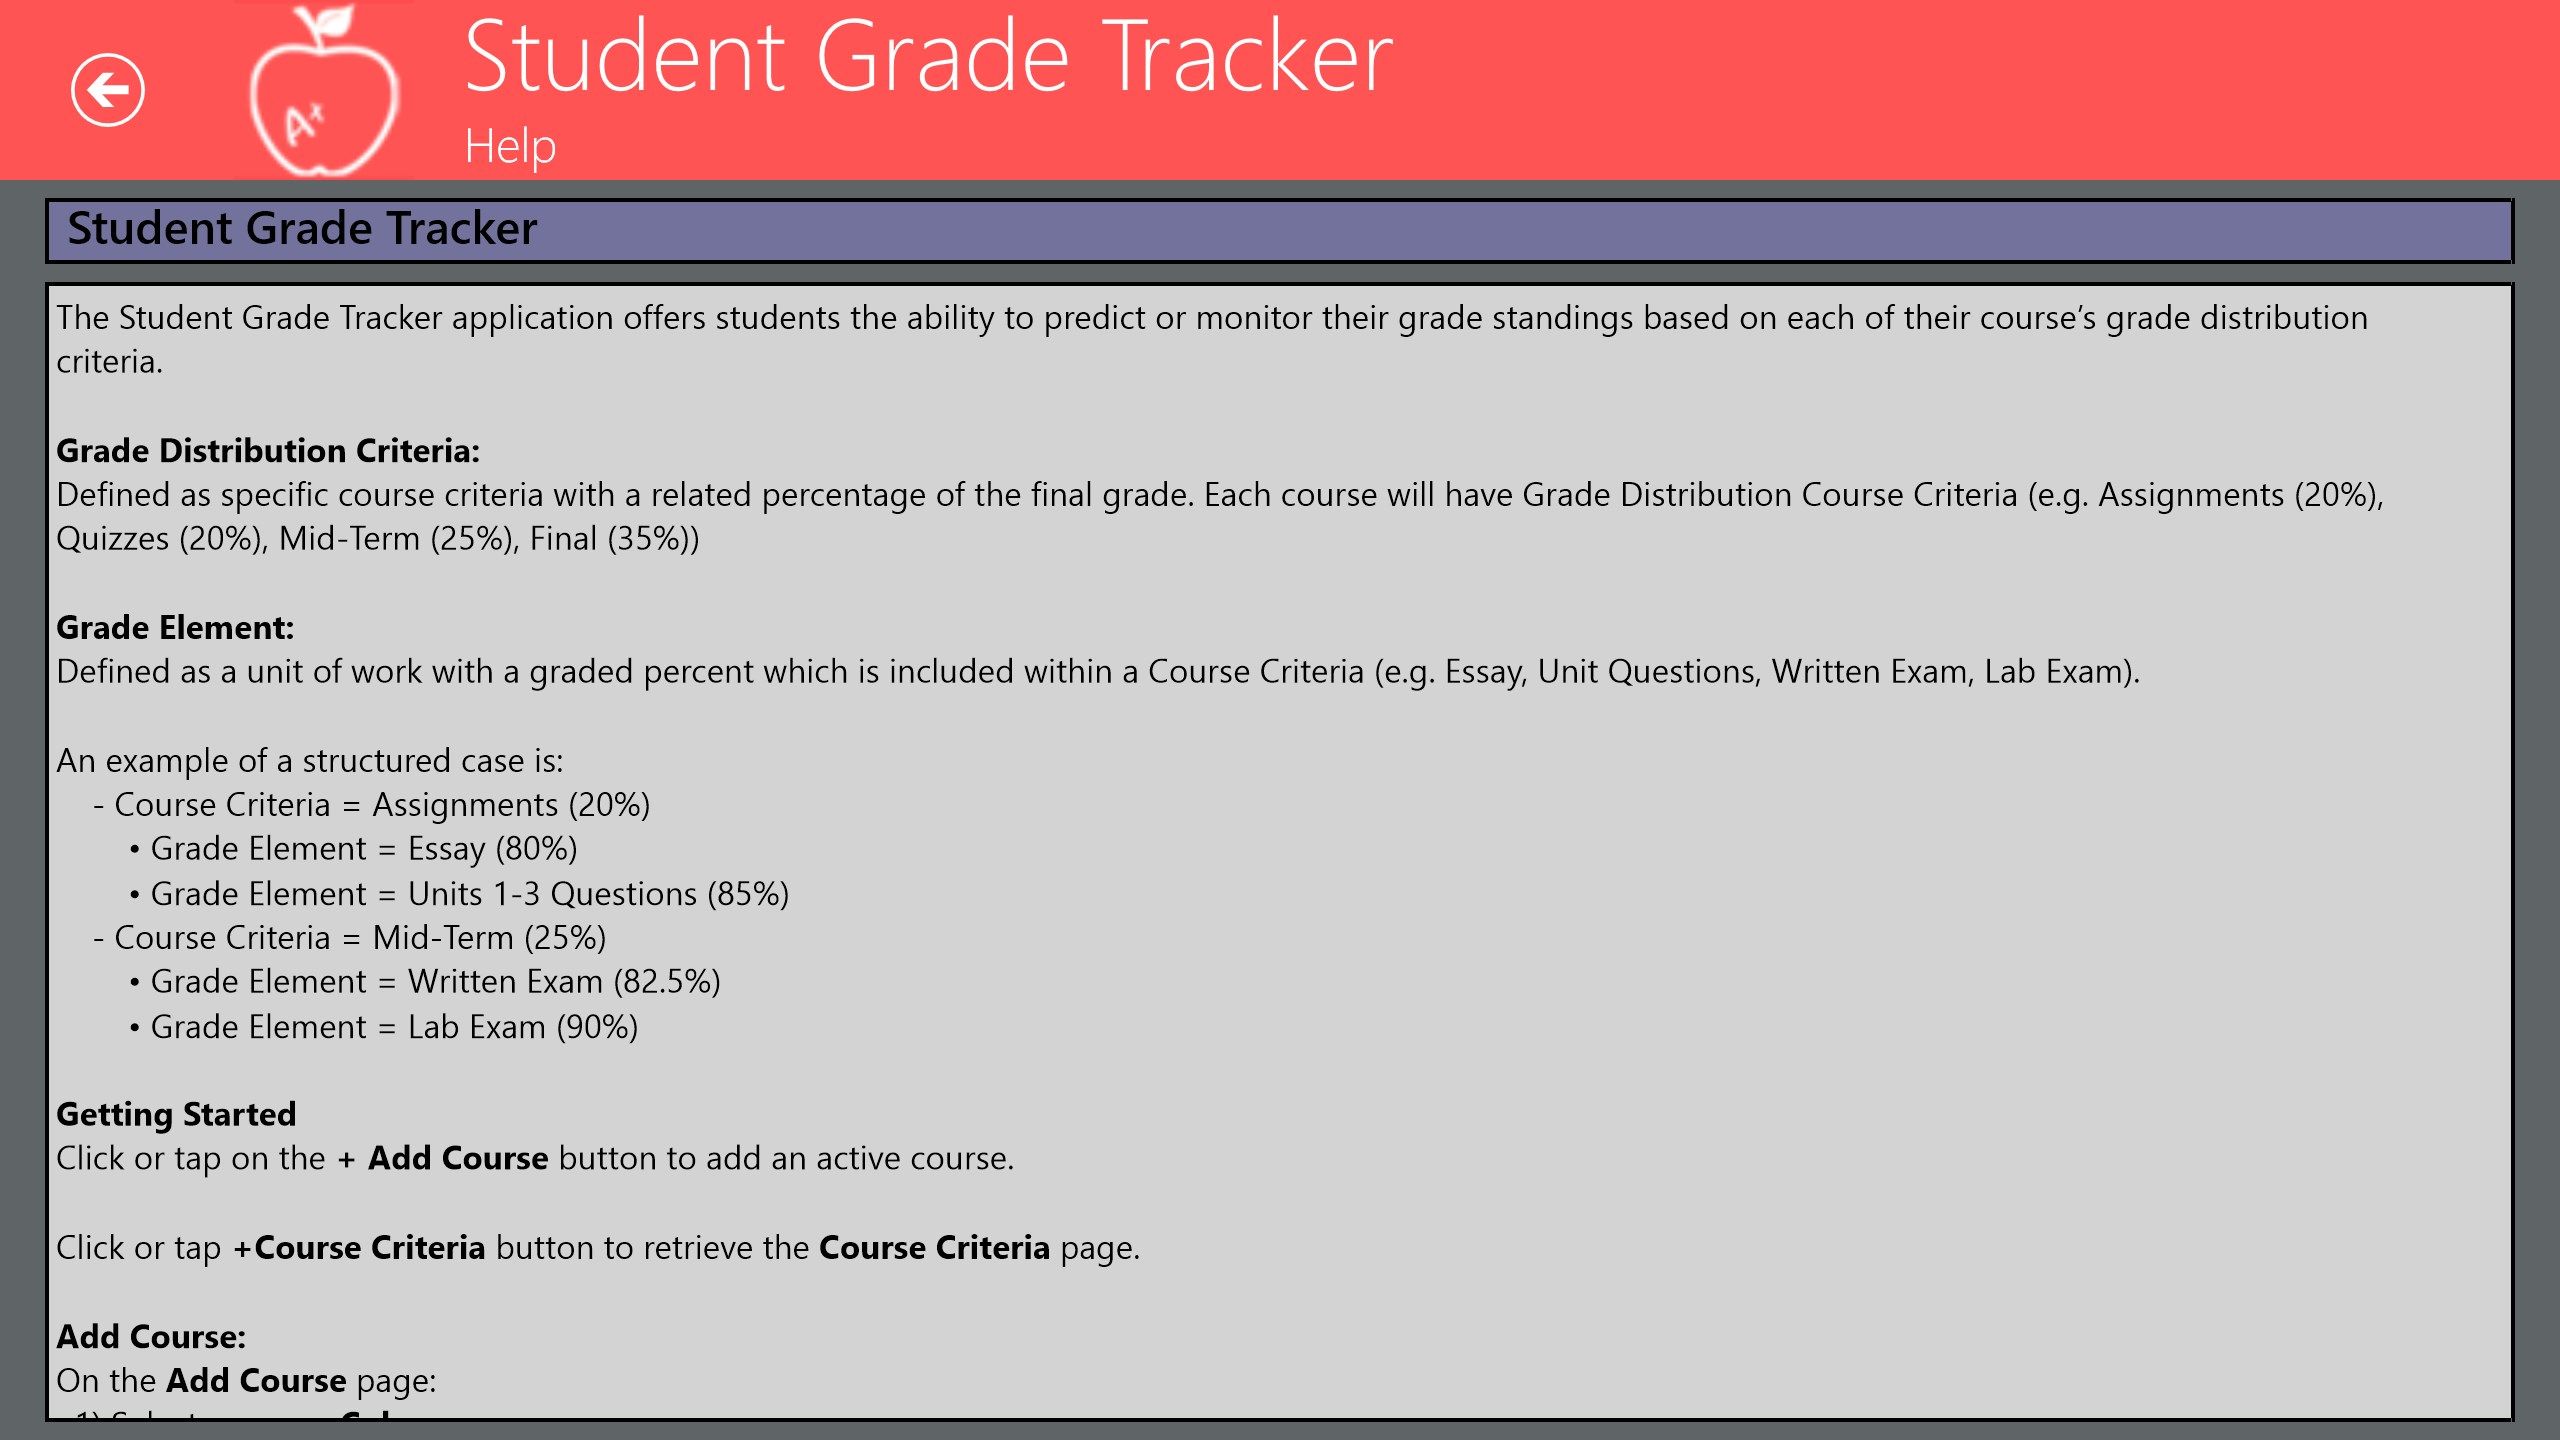 Student Grade Tracker Help screen